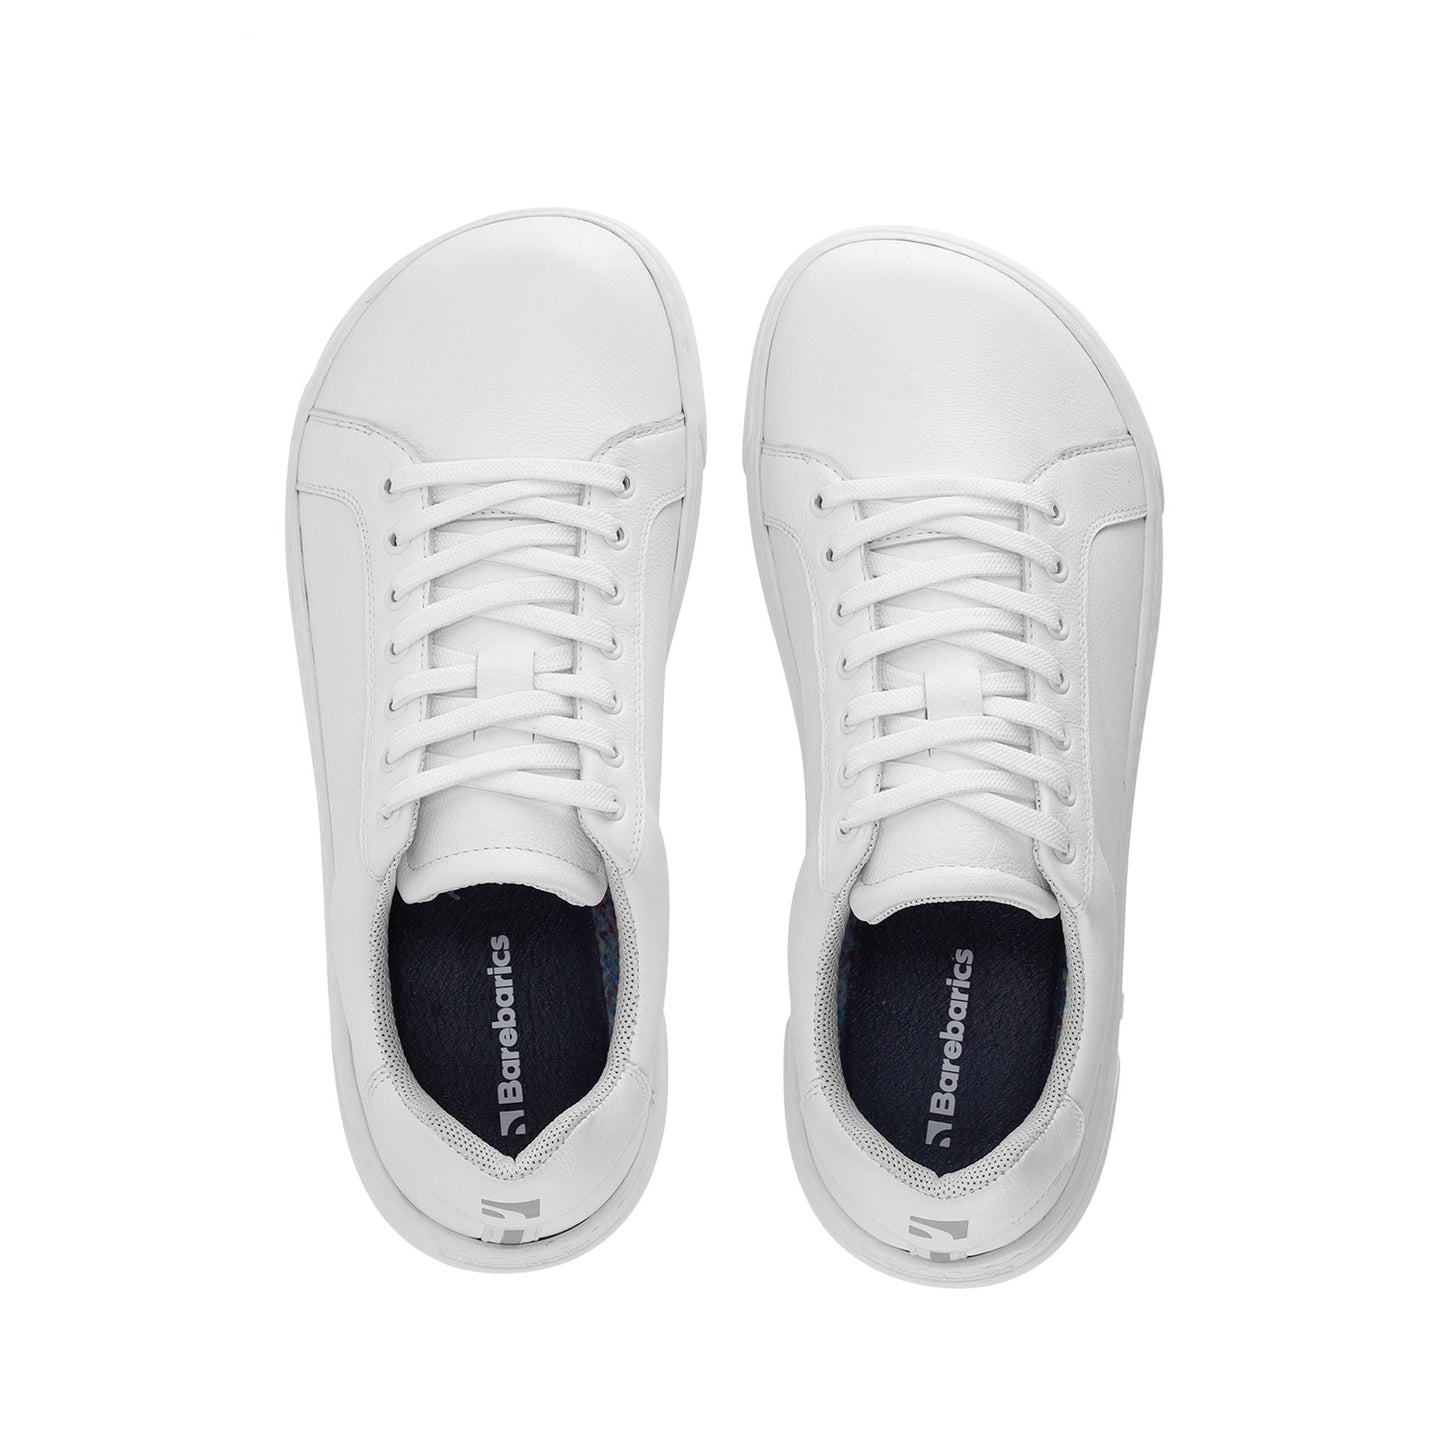 Barefoot Sneakers Barebarics Zoom - All White - Leather 5 OzBarefoot Australia